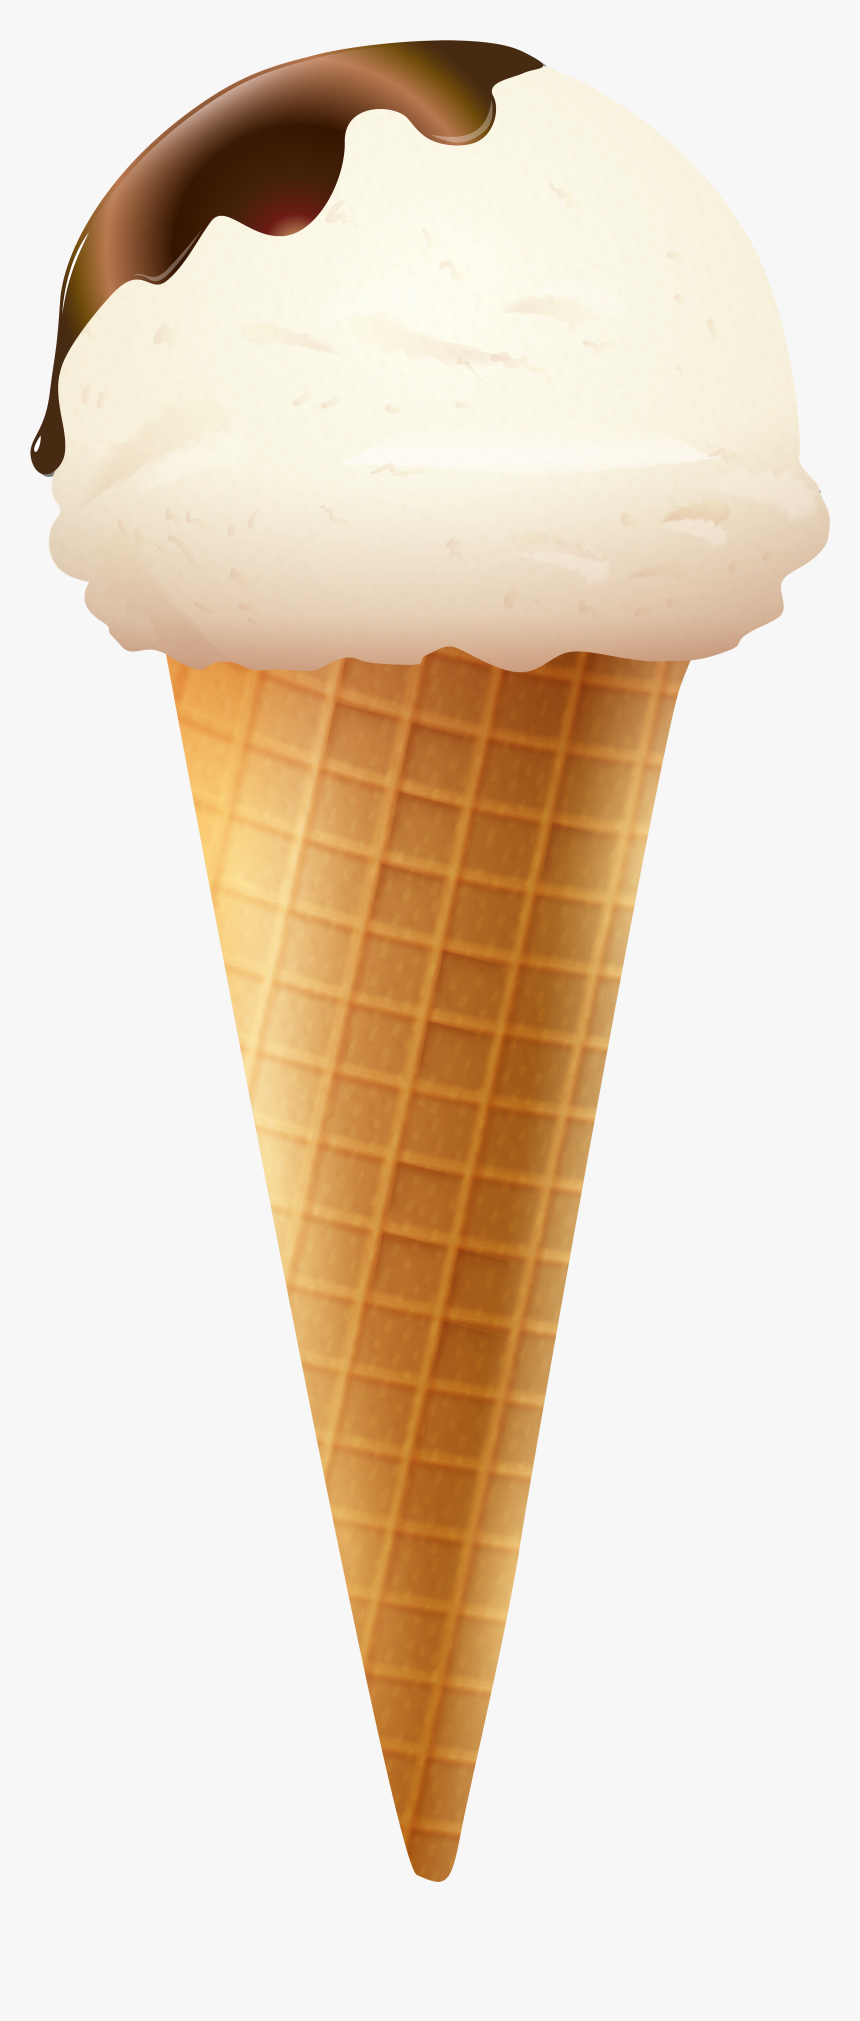 Ice Cream Cone Snow Cone Sundae - Transparent Background Icecream Cone Clipart, HD Png Download, Free Download